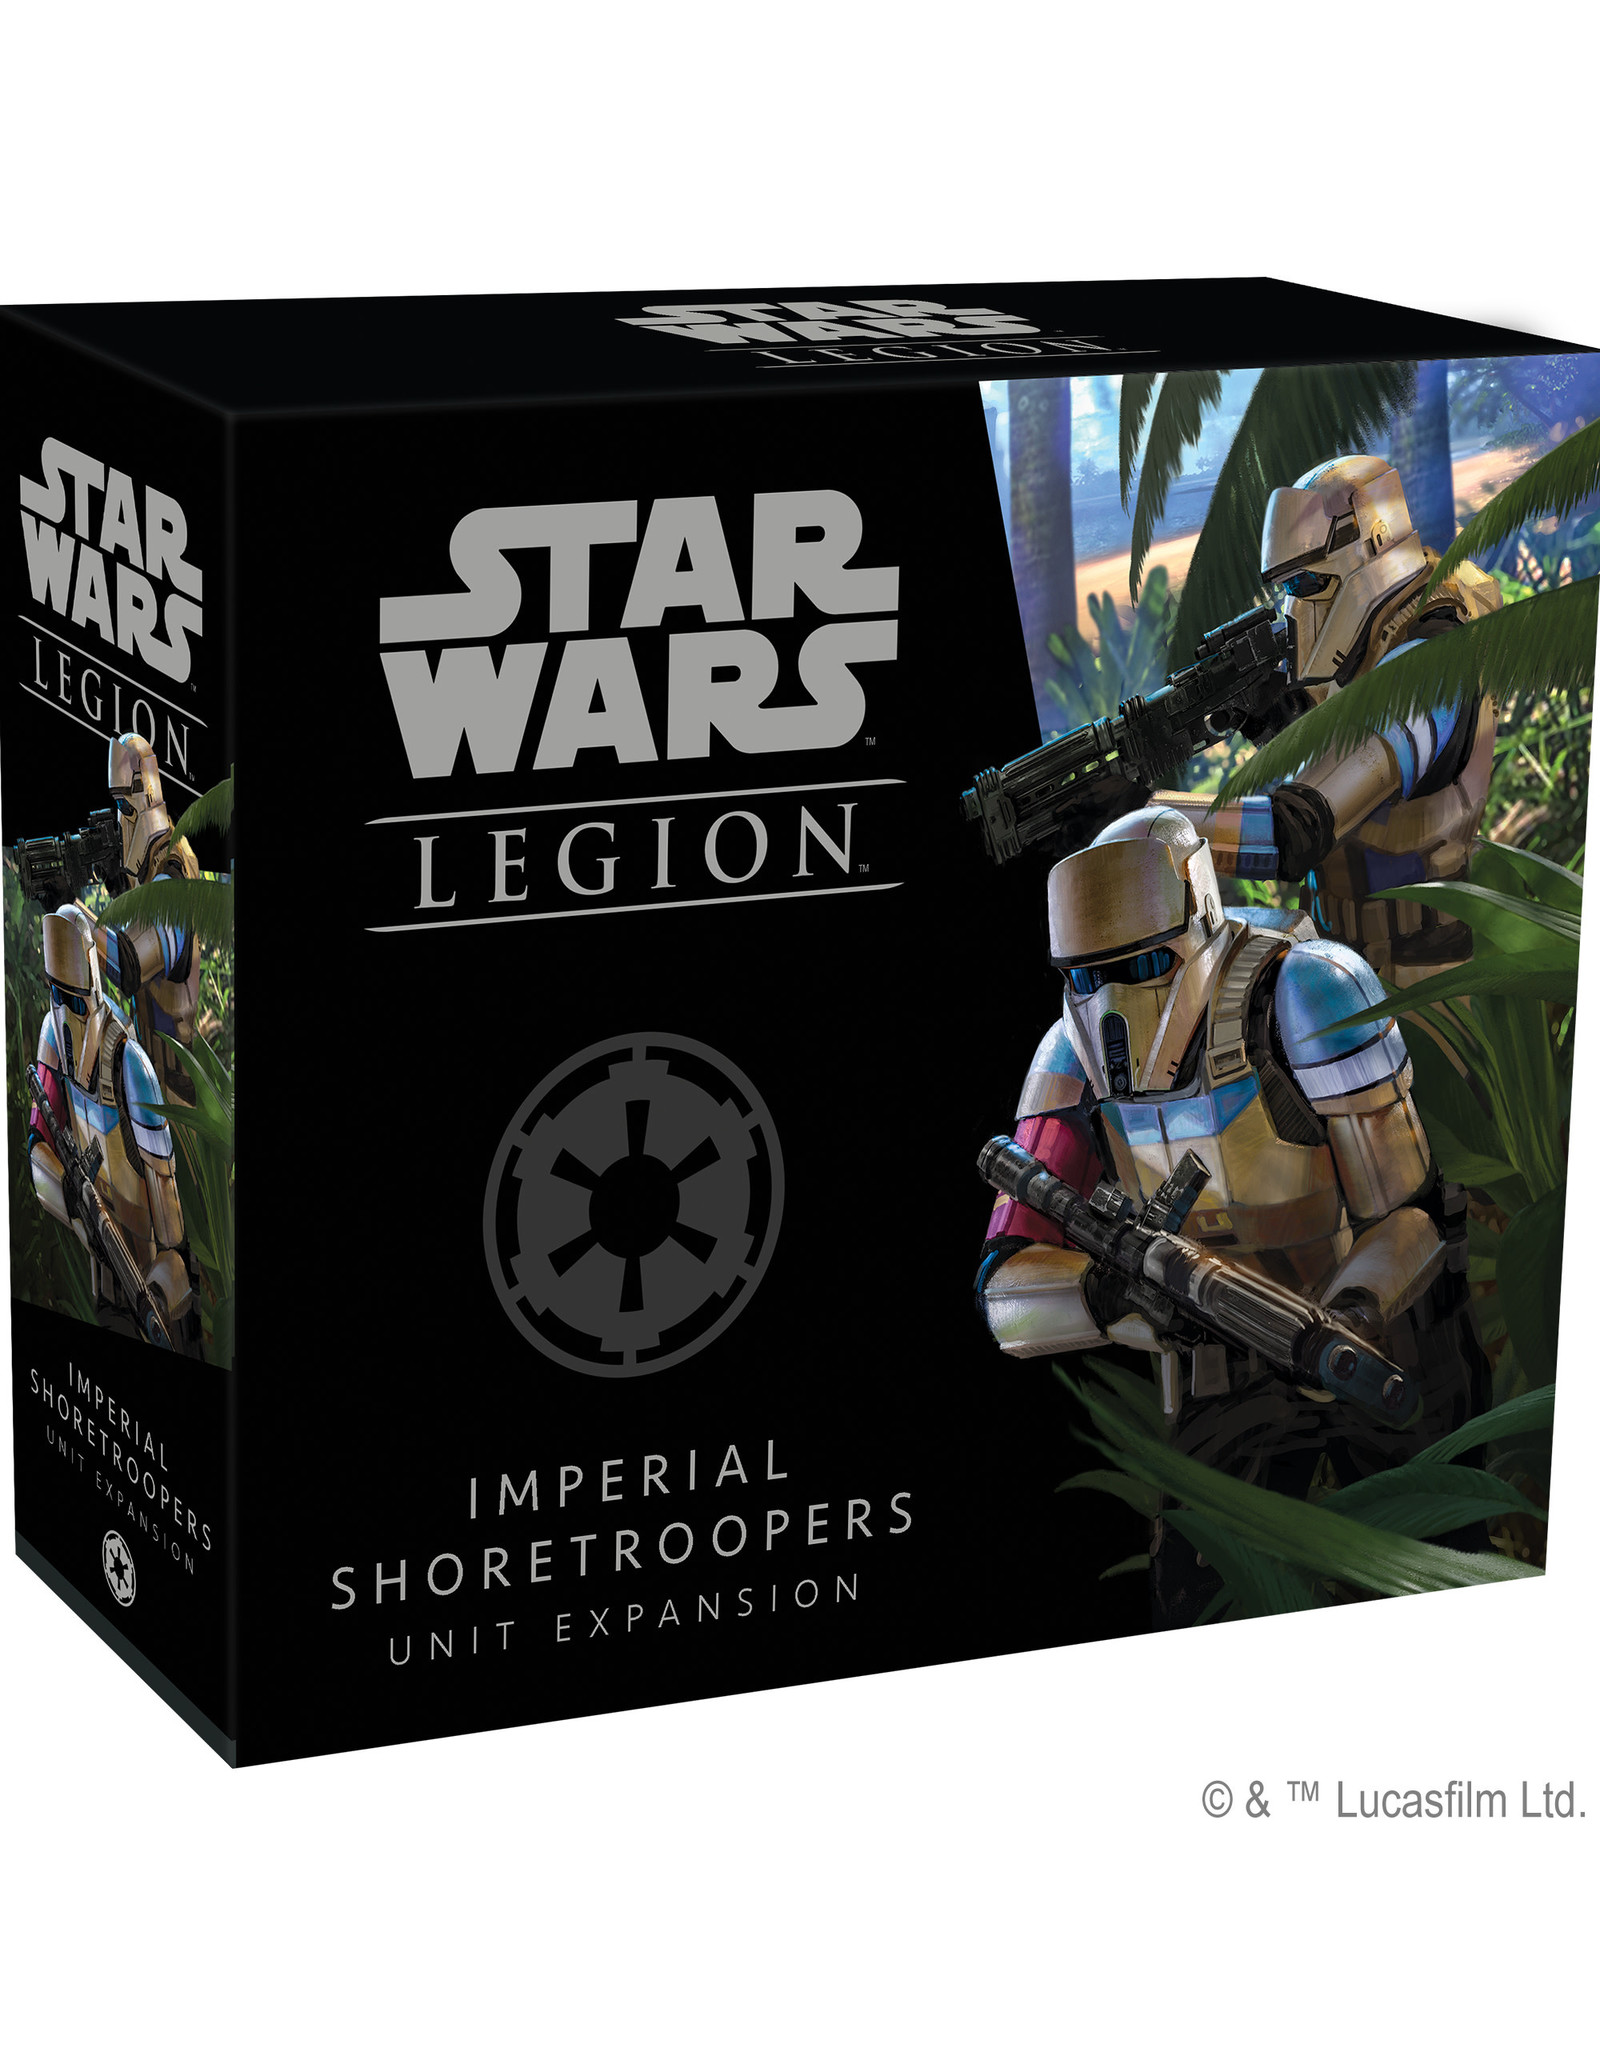 STAR WARS LEGION Star Wars Legion Imperial Shoretroopers Unit Expansion